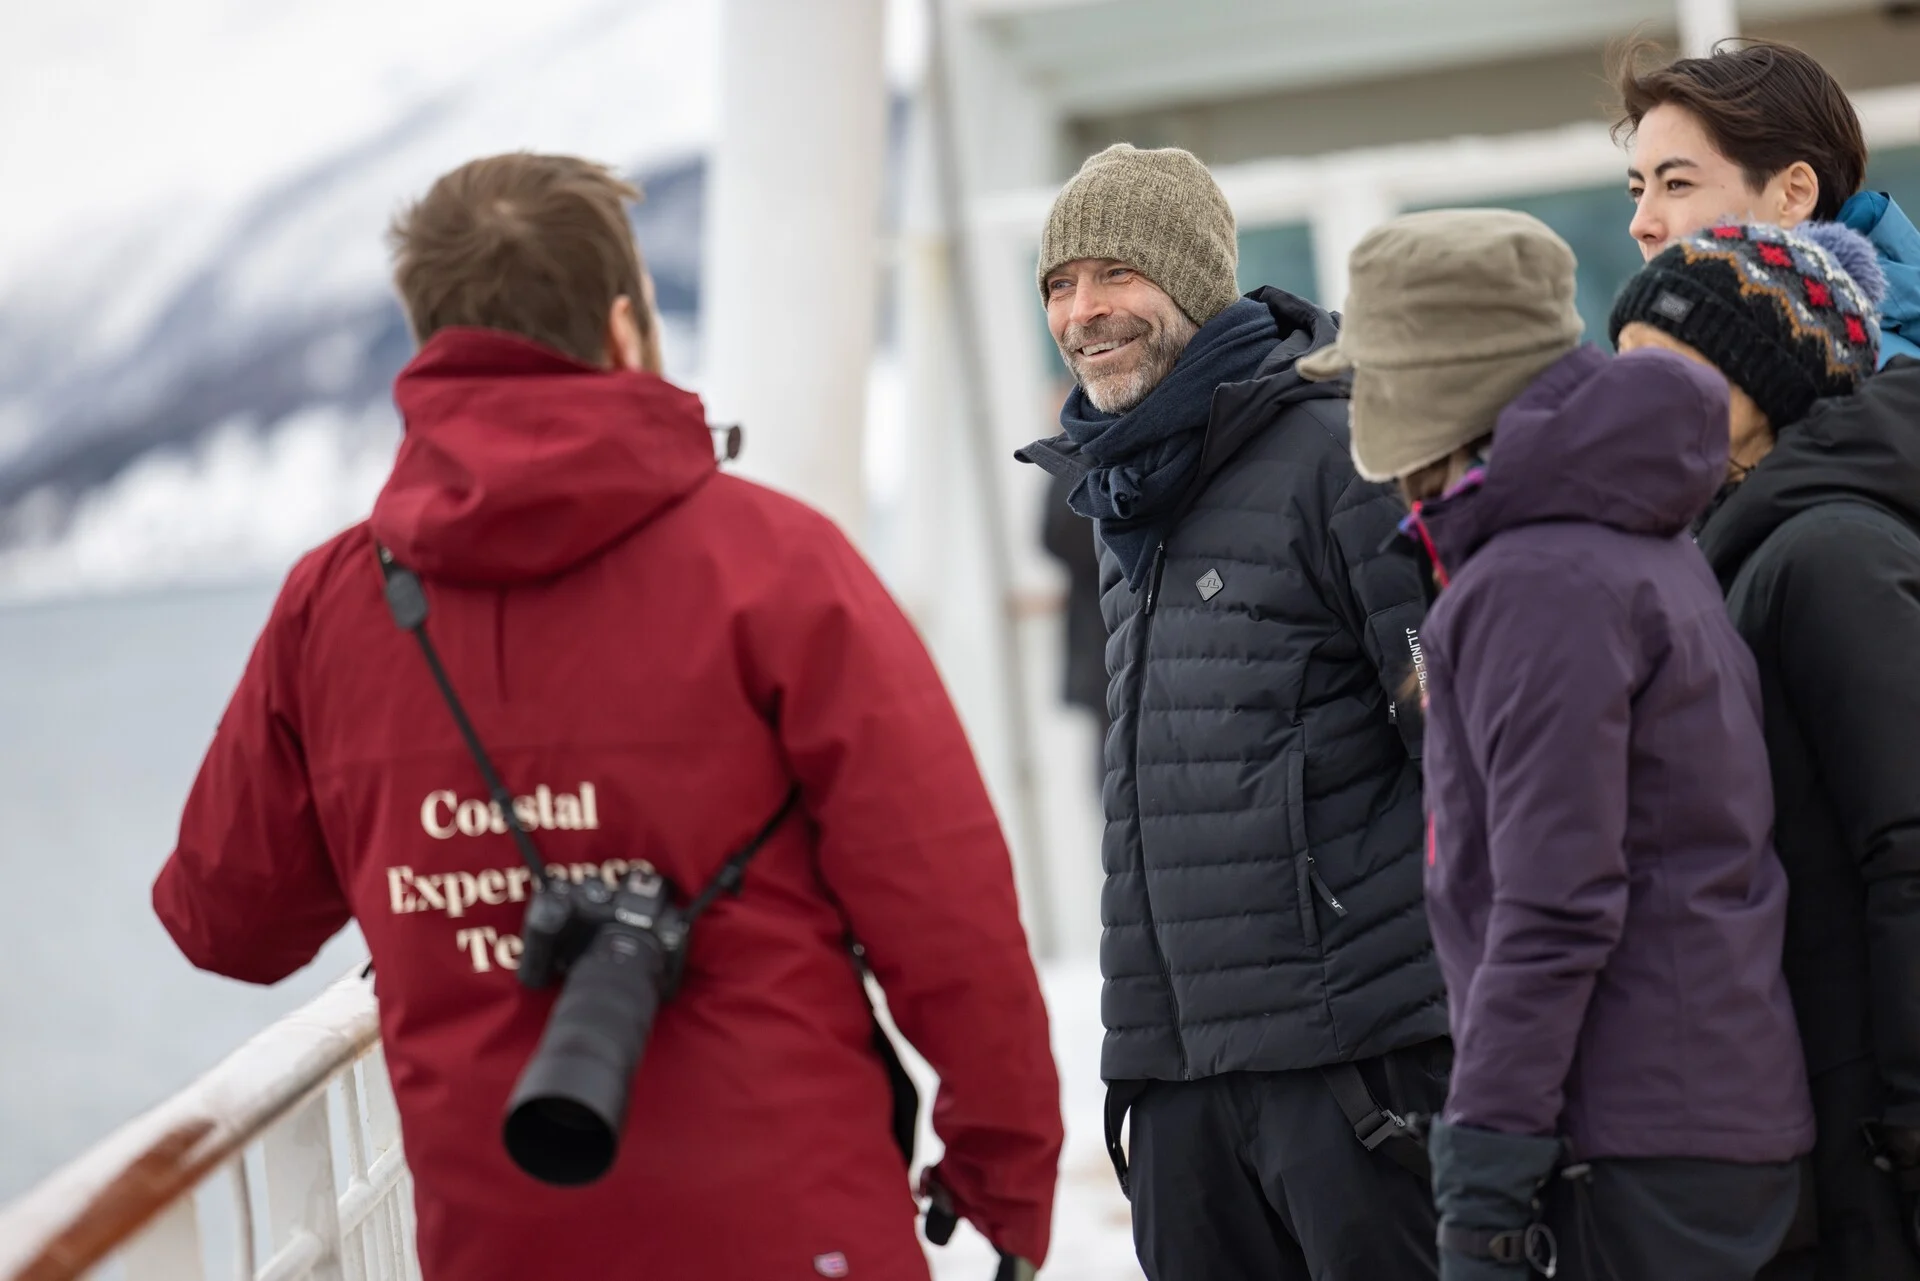 Coastal Experience Team on board Hurtigruten's MS Trollfjord ship